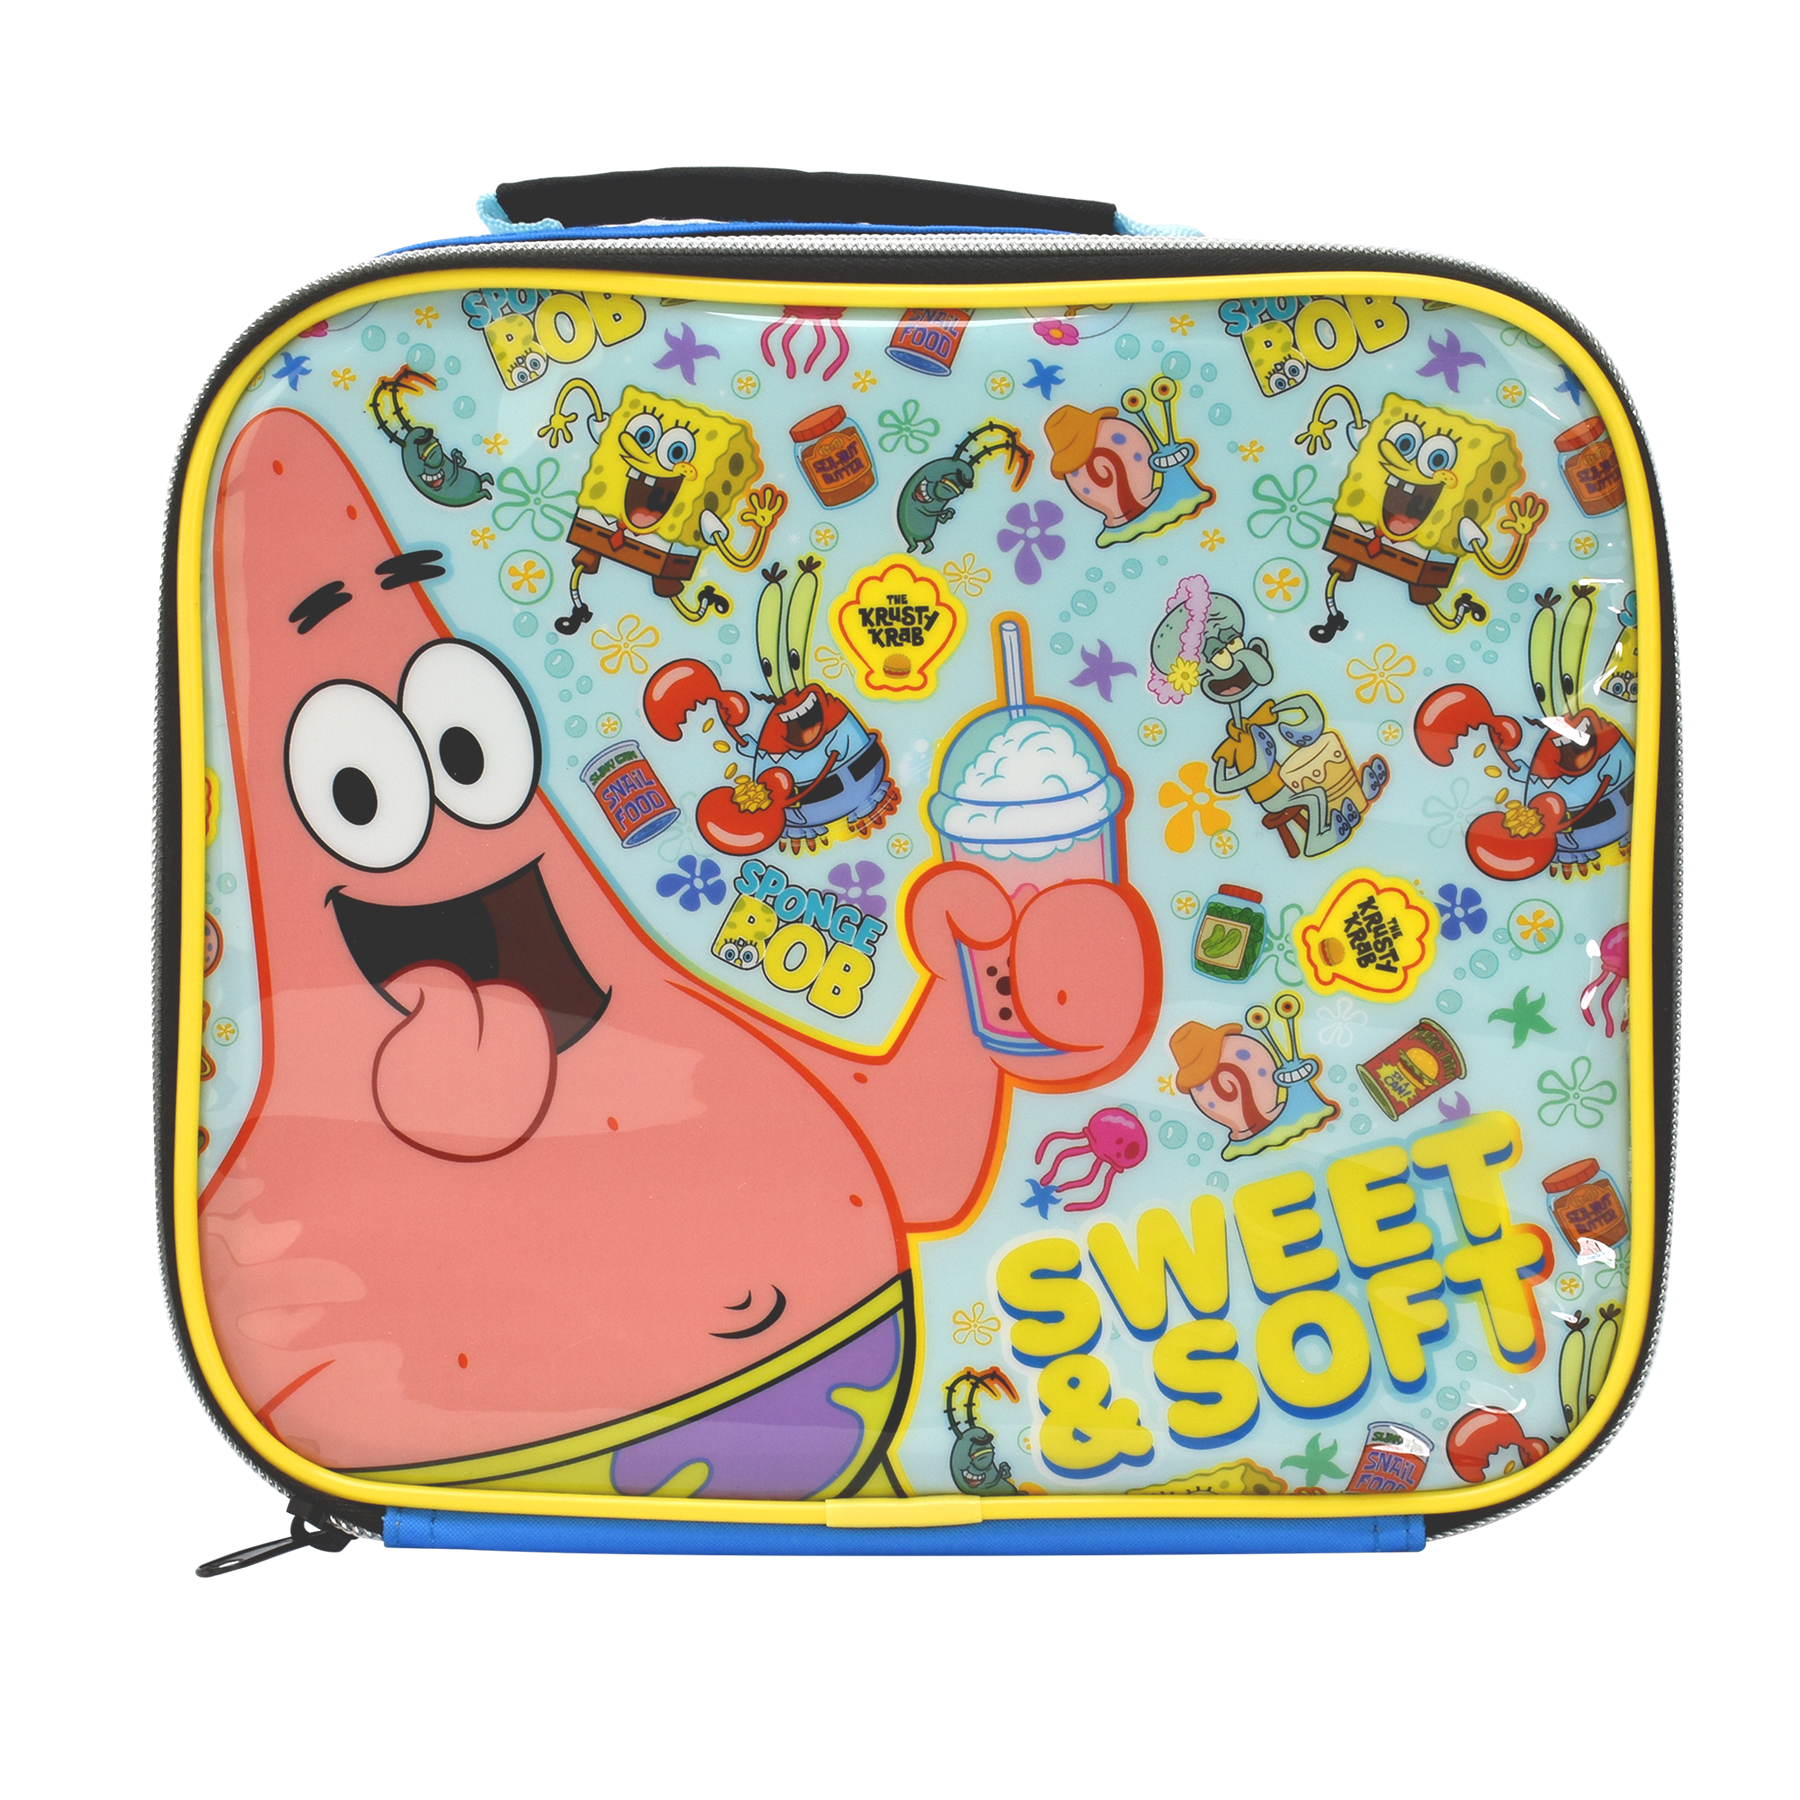 Spongebob Squarepants Back to School Set